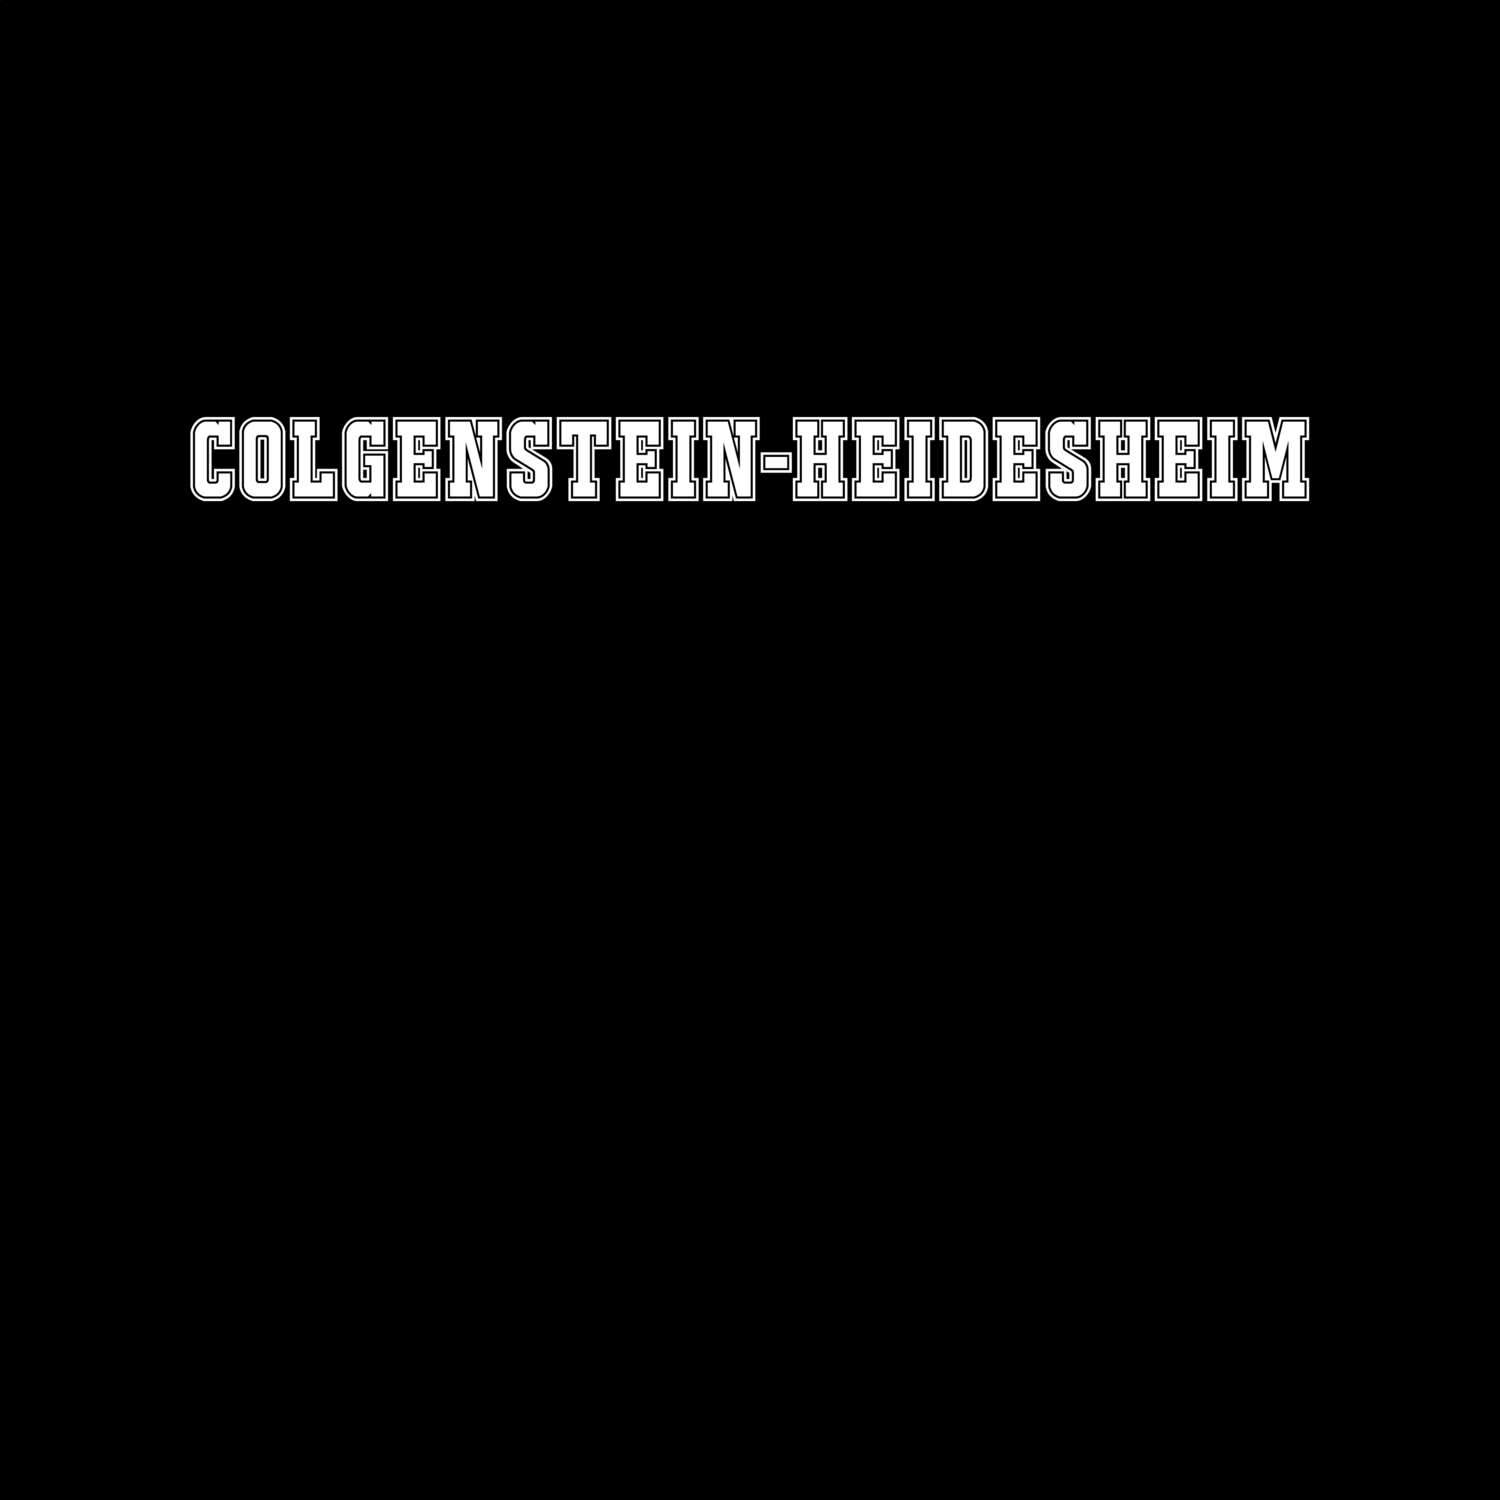 Colgenstein-Heidesheim T-Shirt »Classic«